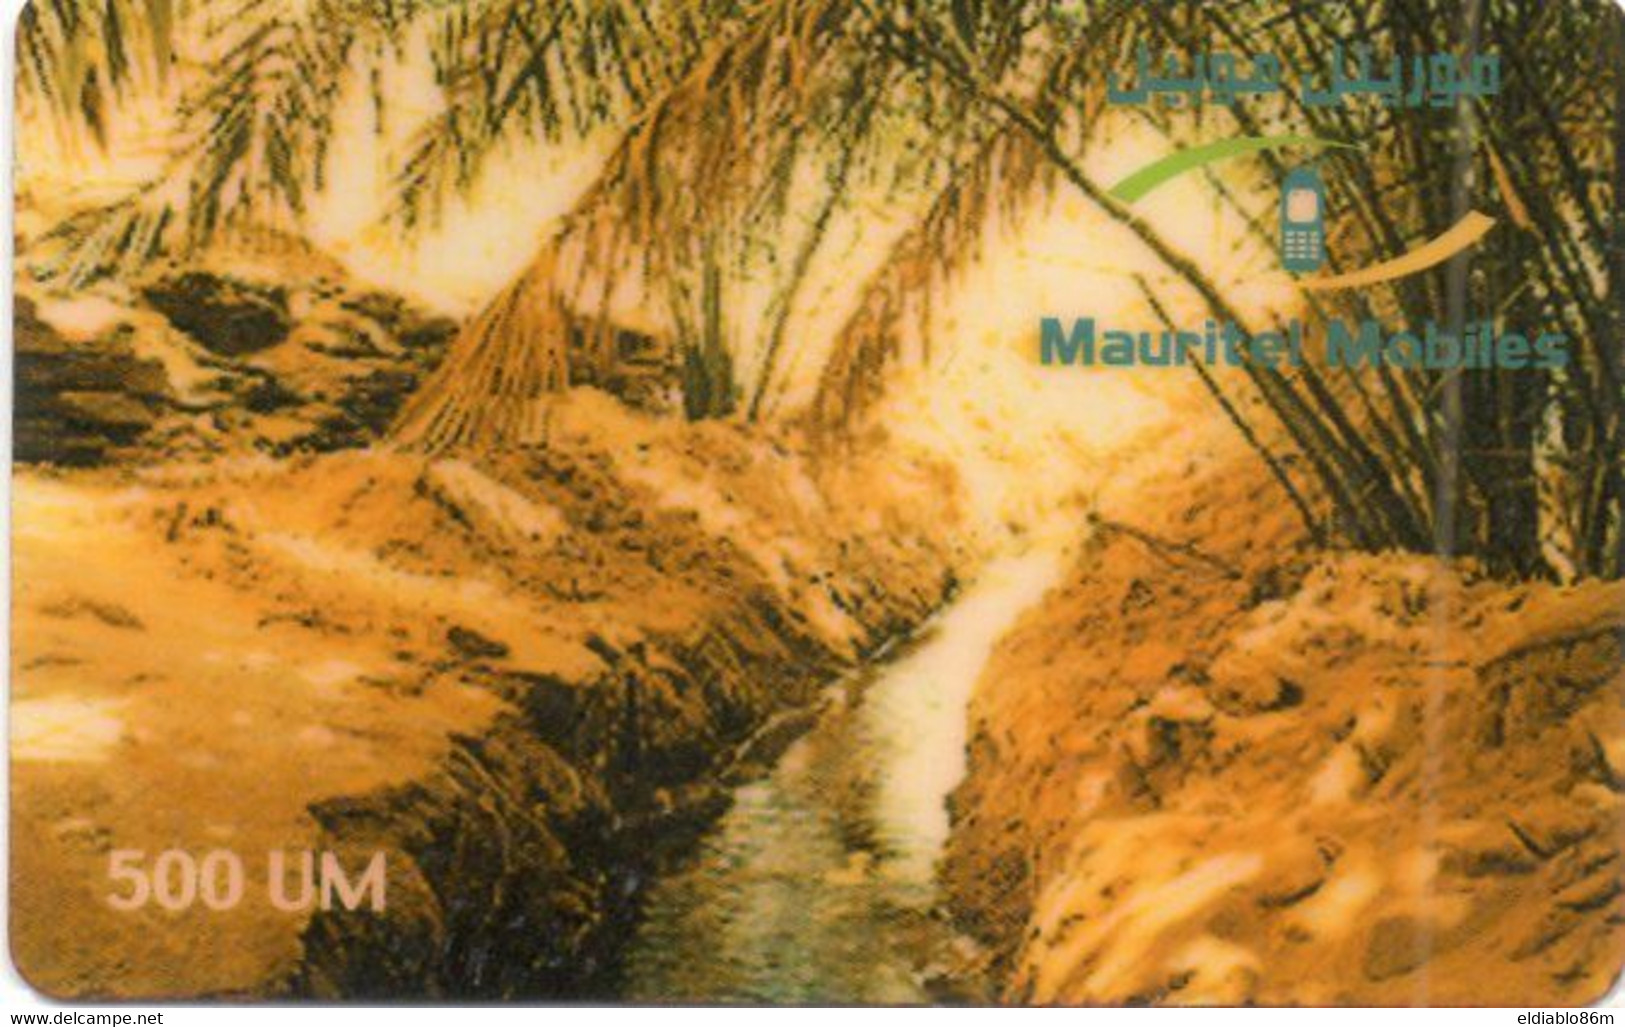 MAURITANIA - PREPAID - MAURITEL MOBILES - OASI - 31/12/2002 - Mauritanien